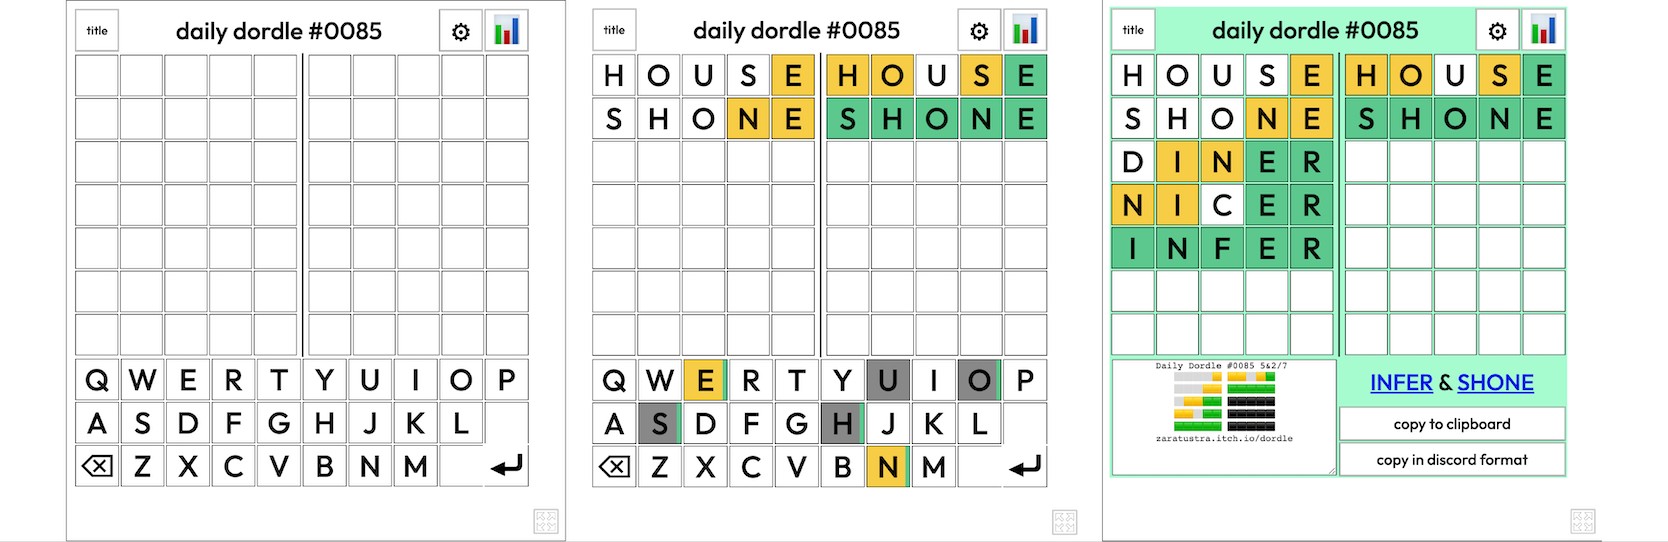 Dordle word game screenshots